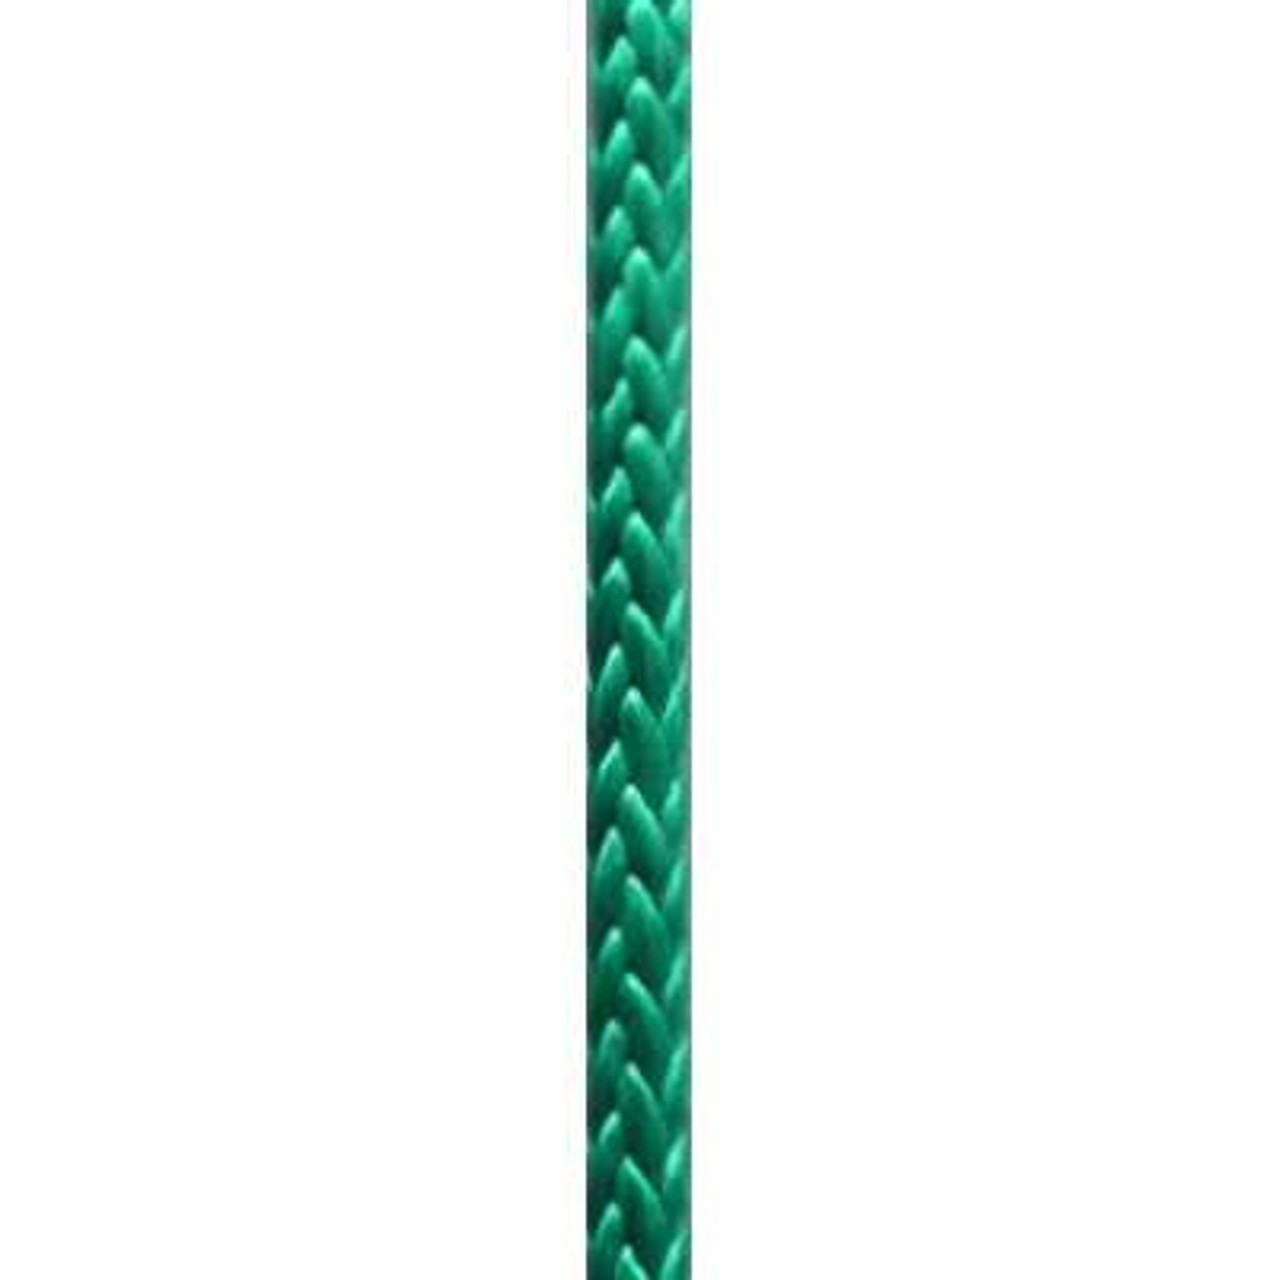 3mm Dyneema SK78 Rope - Hard Wearing 12 Strand Dyneema